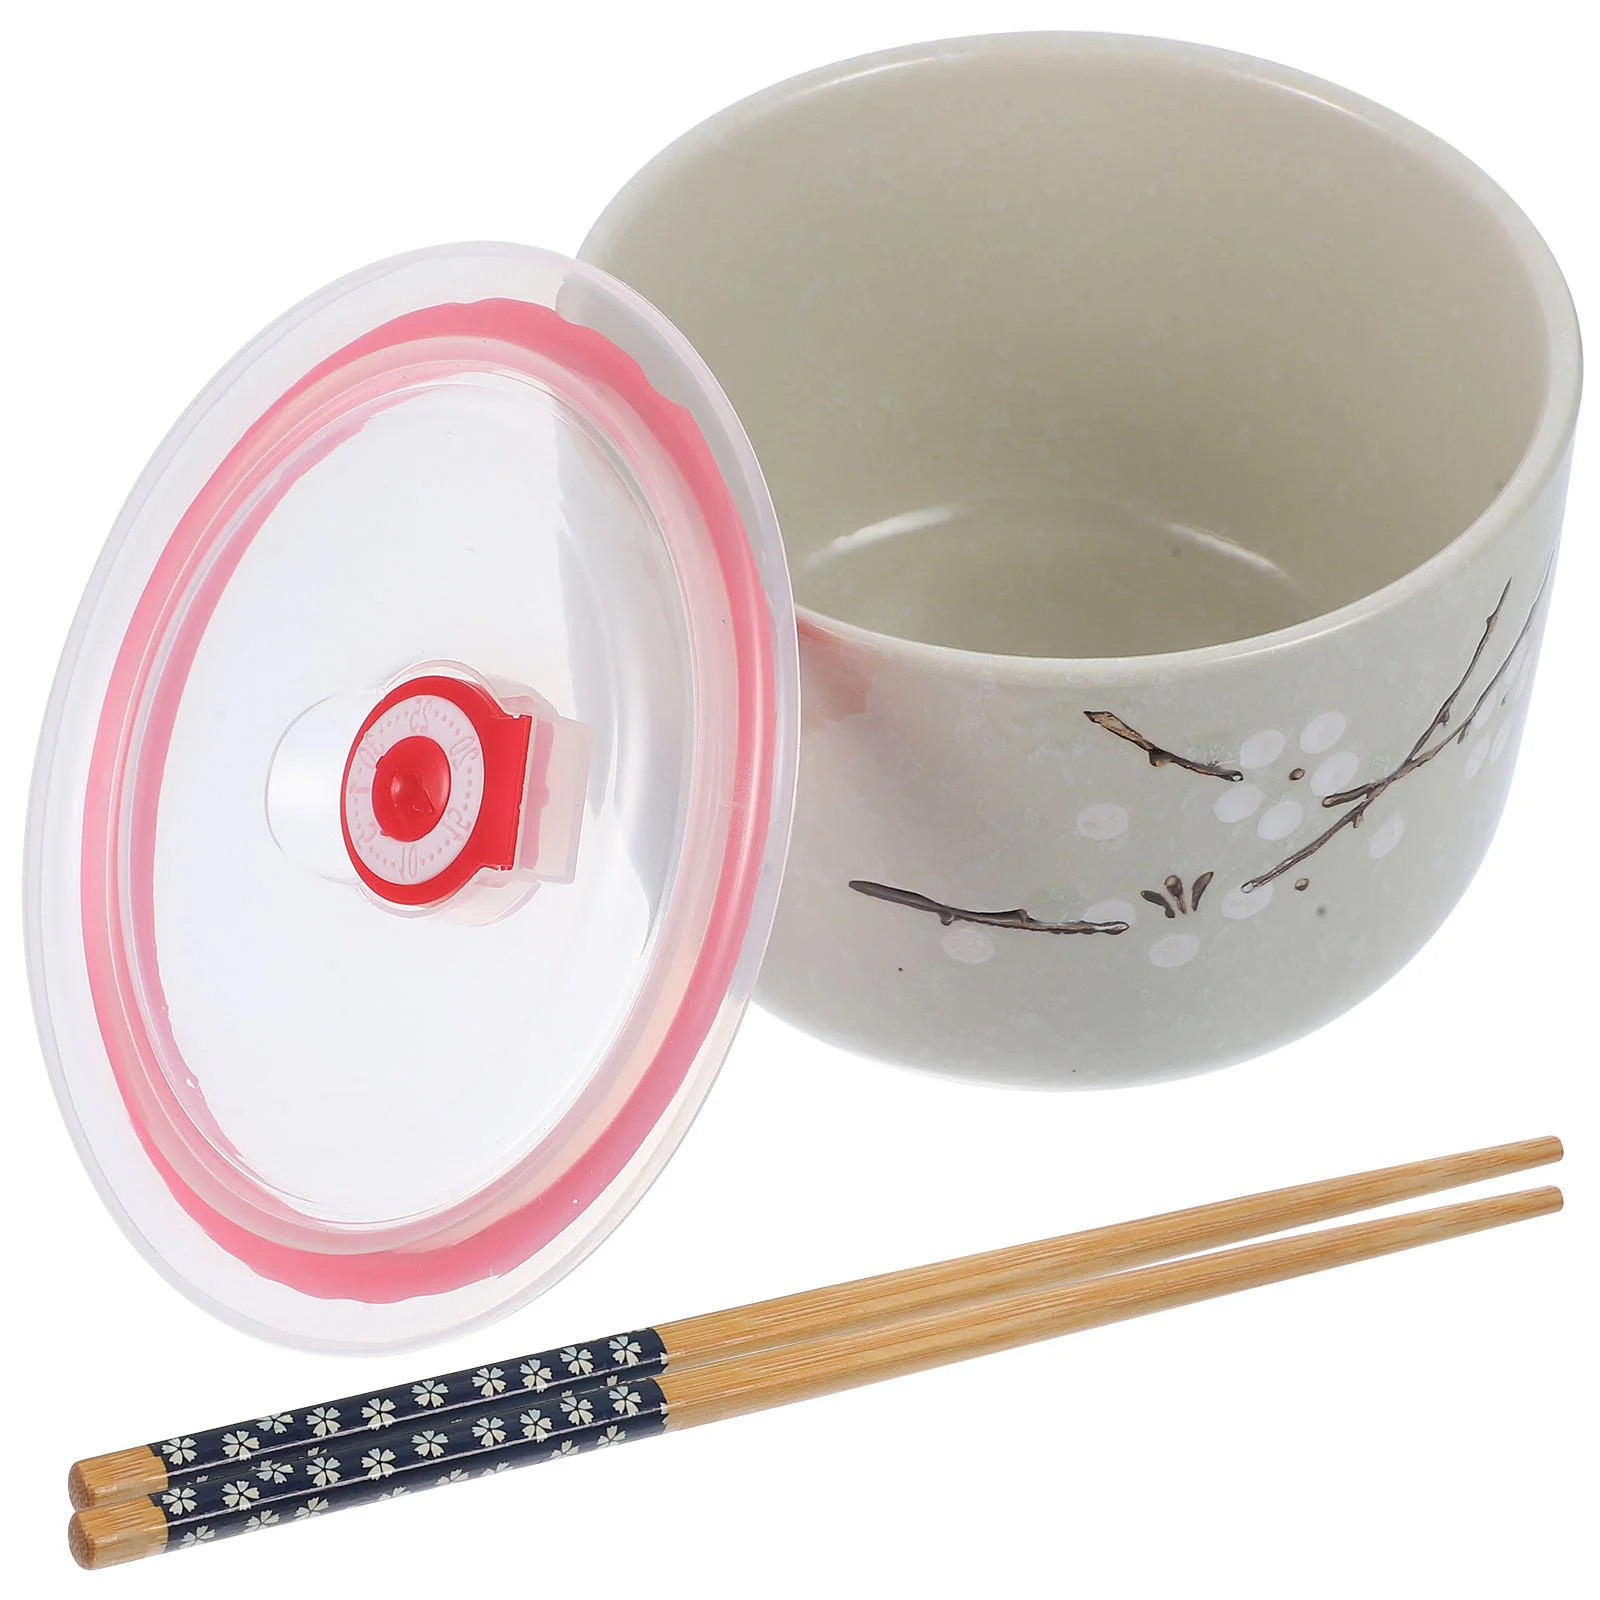 

Ceramic Lunch Eat Bowl Accessory Instant Noodle Bowls Lids Daily Use Food Lidded Design Bento Plastic Convenient Ramen